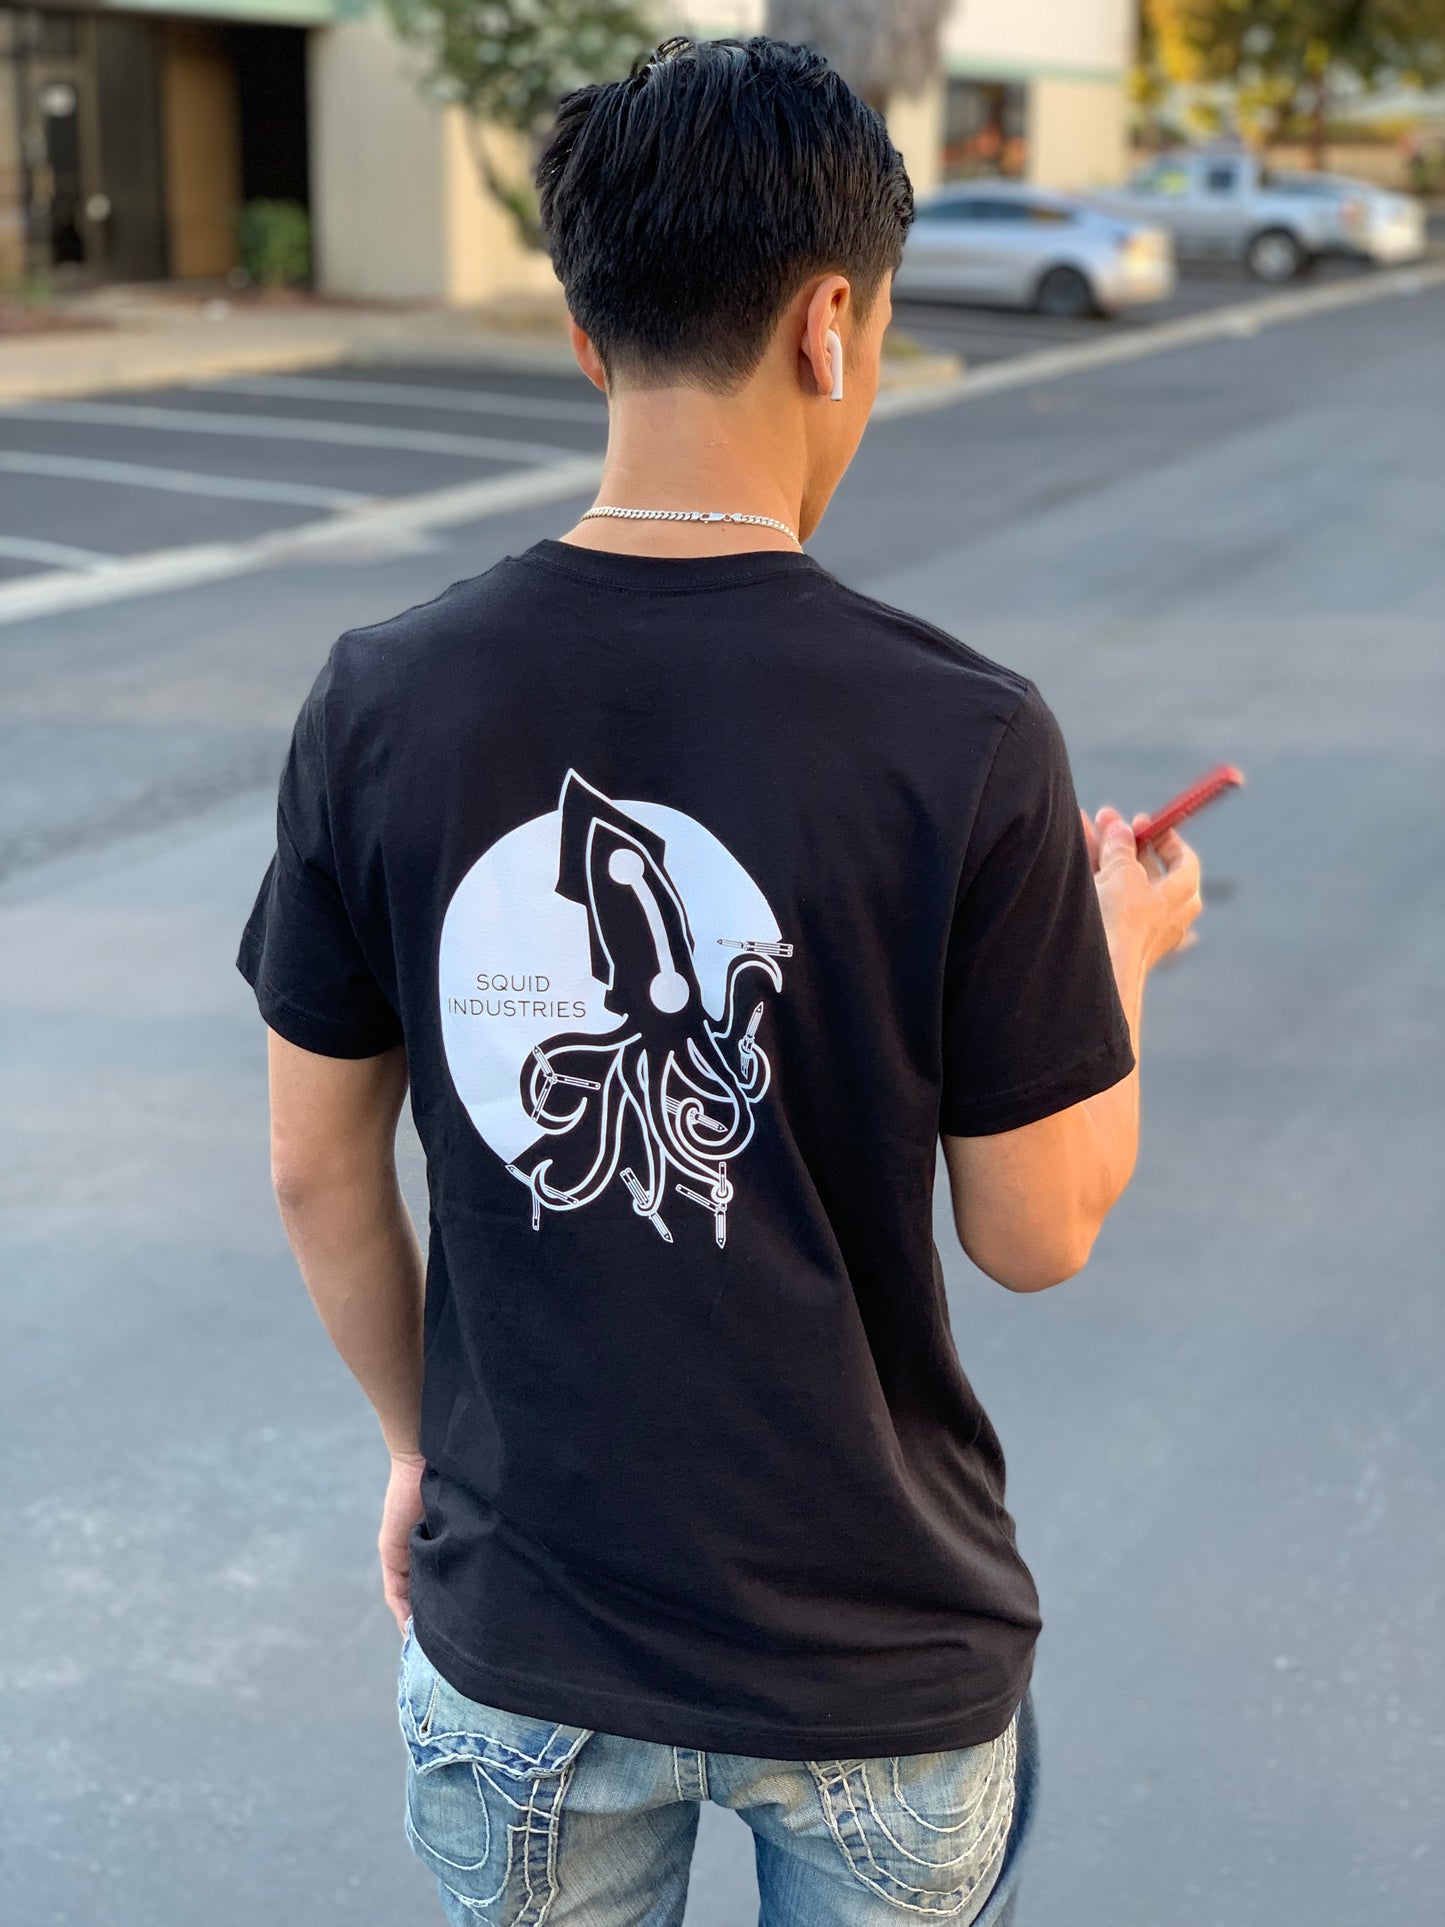 Squid industries black logo t shirt